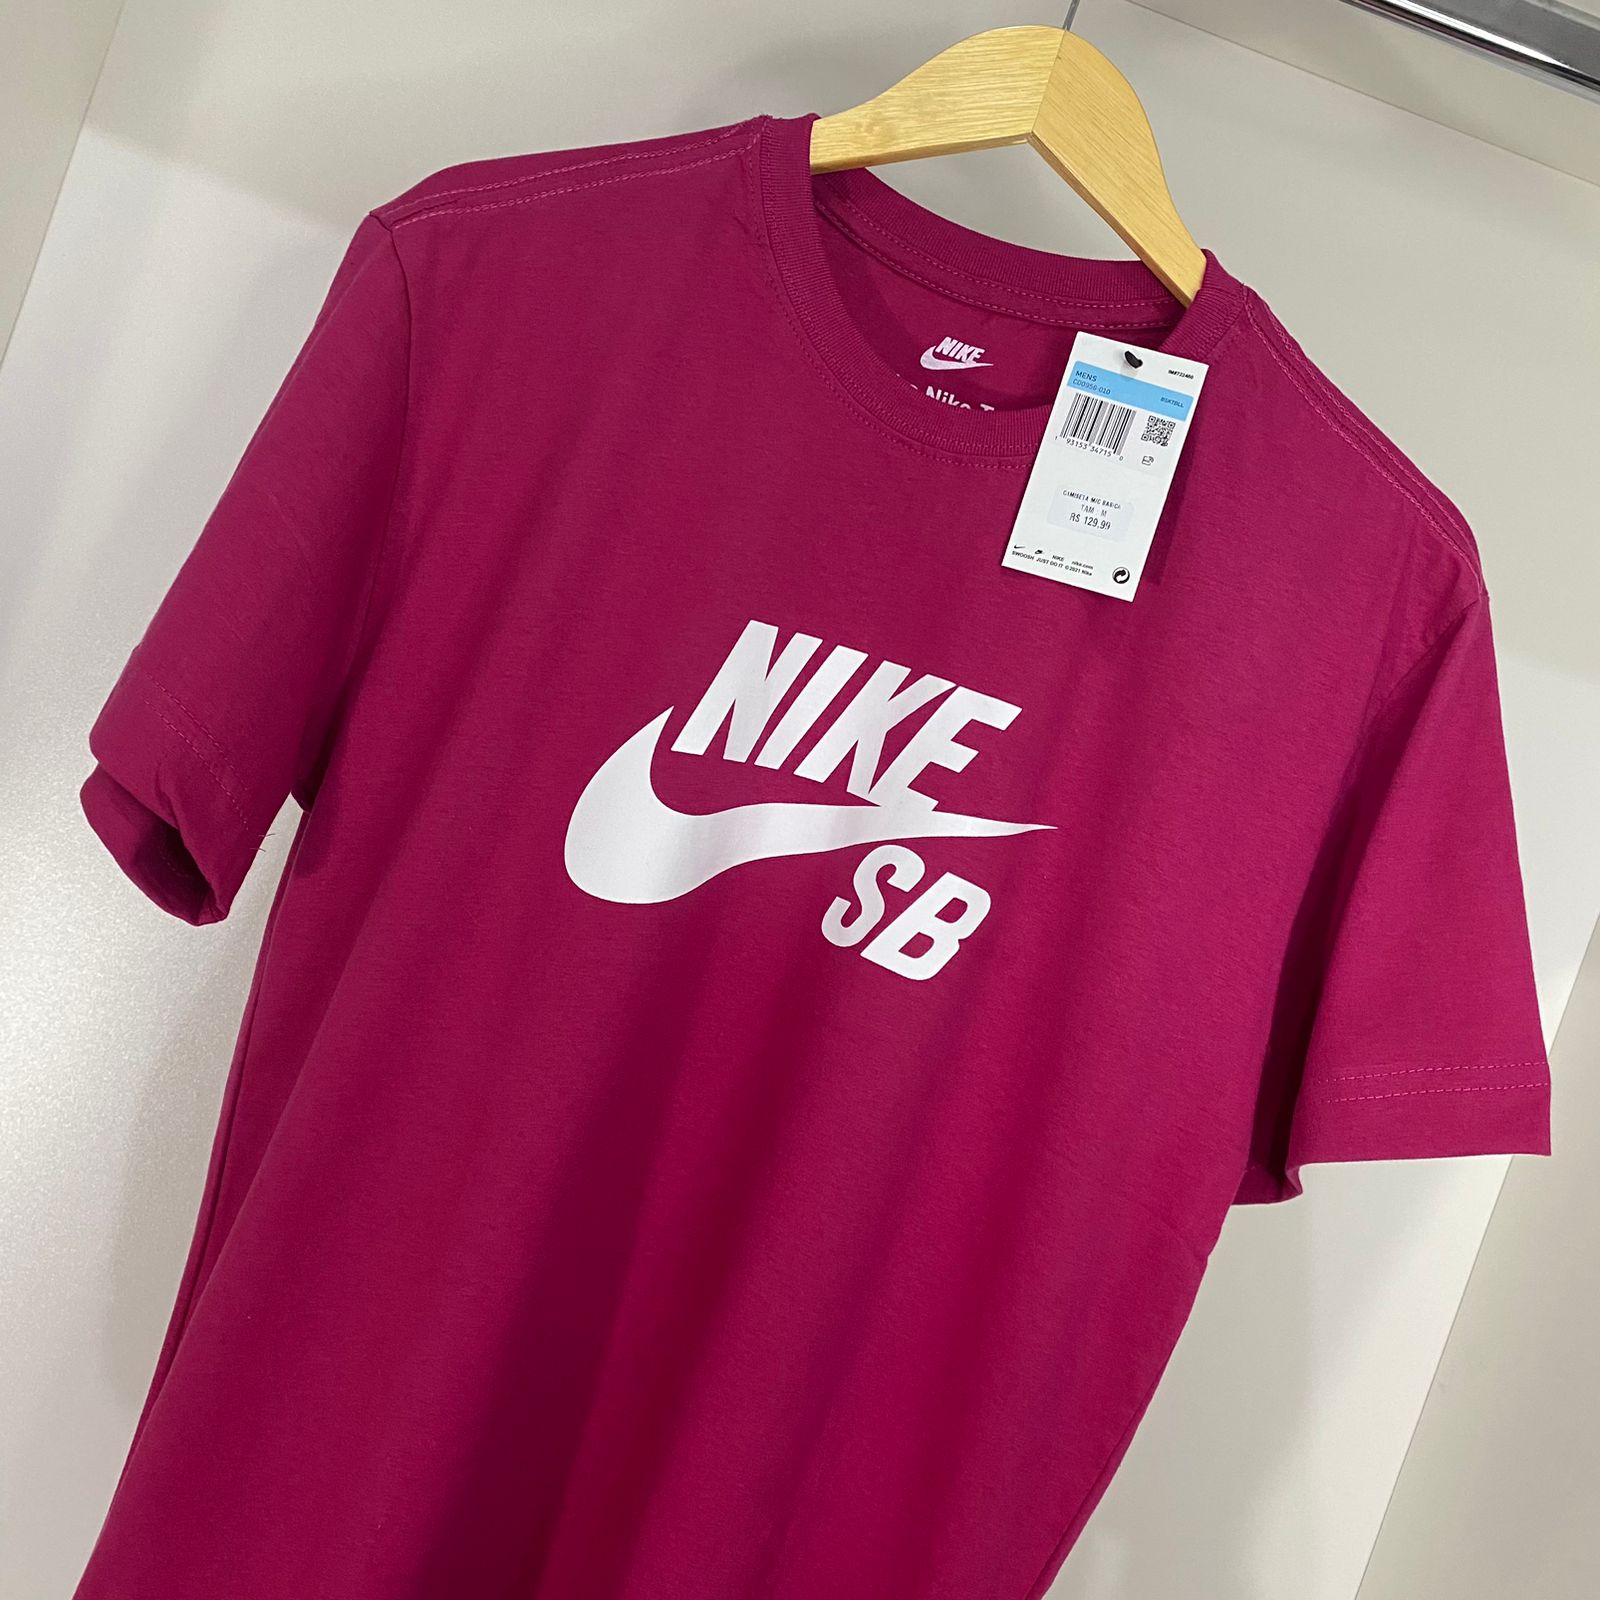 Camiseta Rosa Nike Sb - Roupas e Acessórios